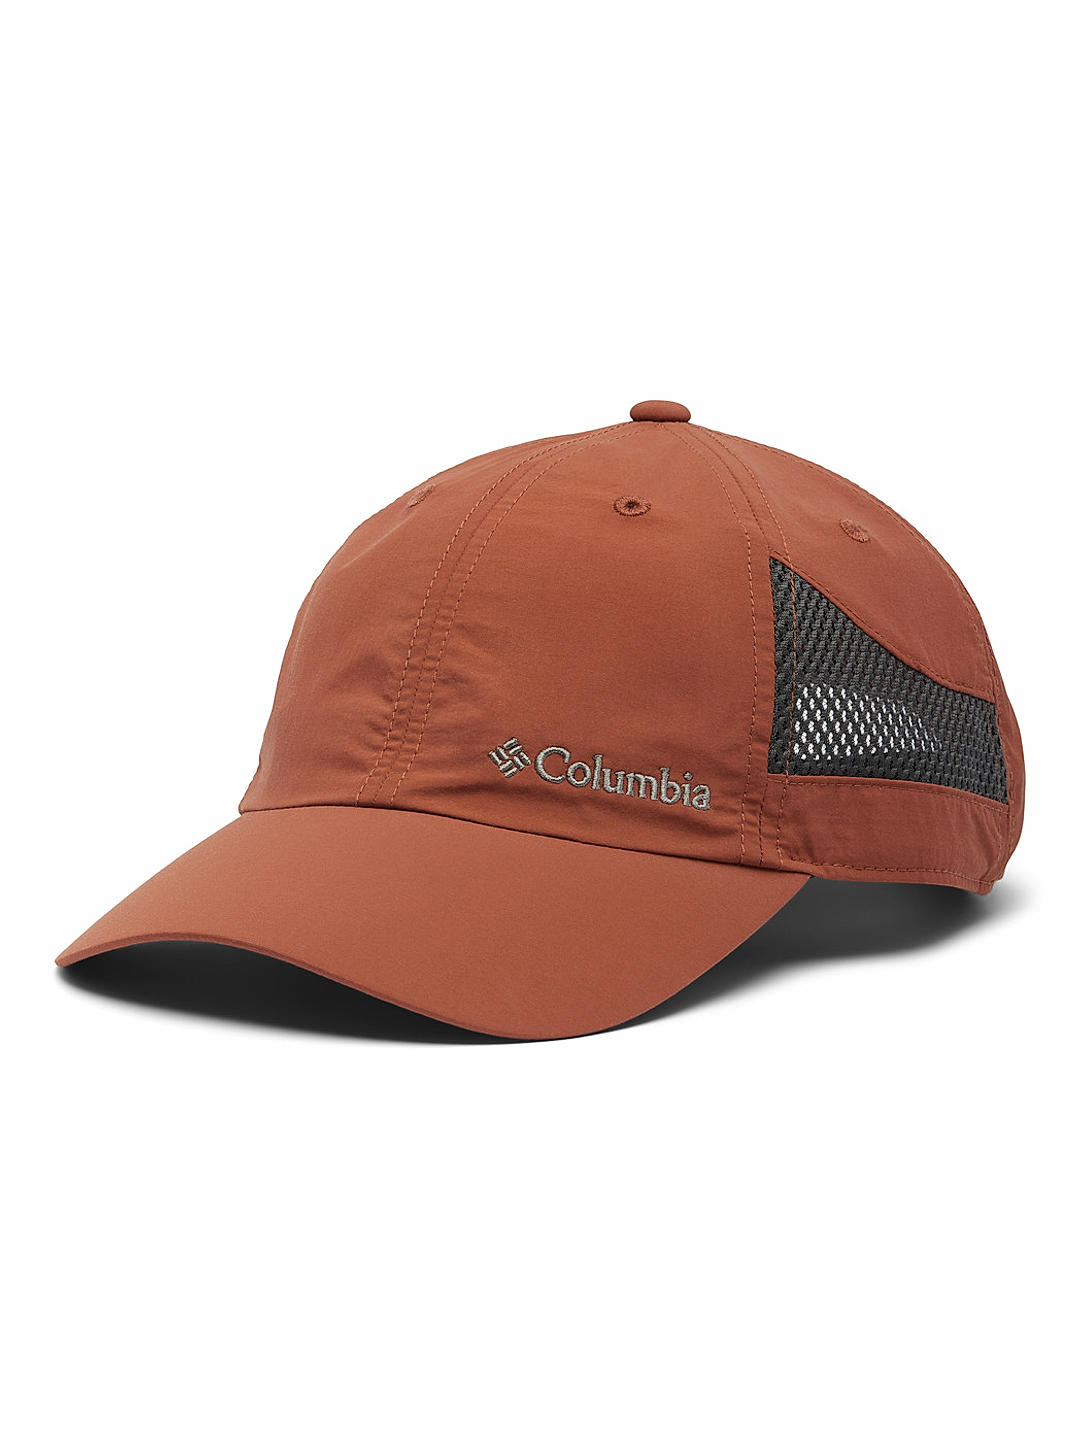 Columbia Unisex Brown Tech Shade Cap (Sun Protection)